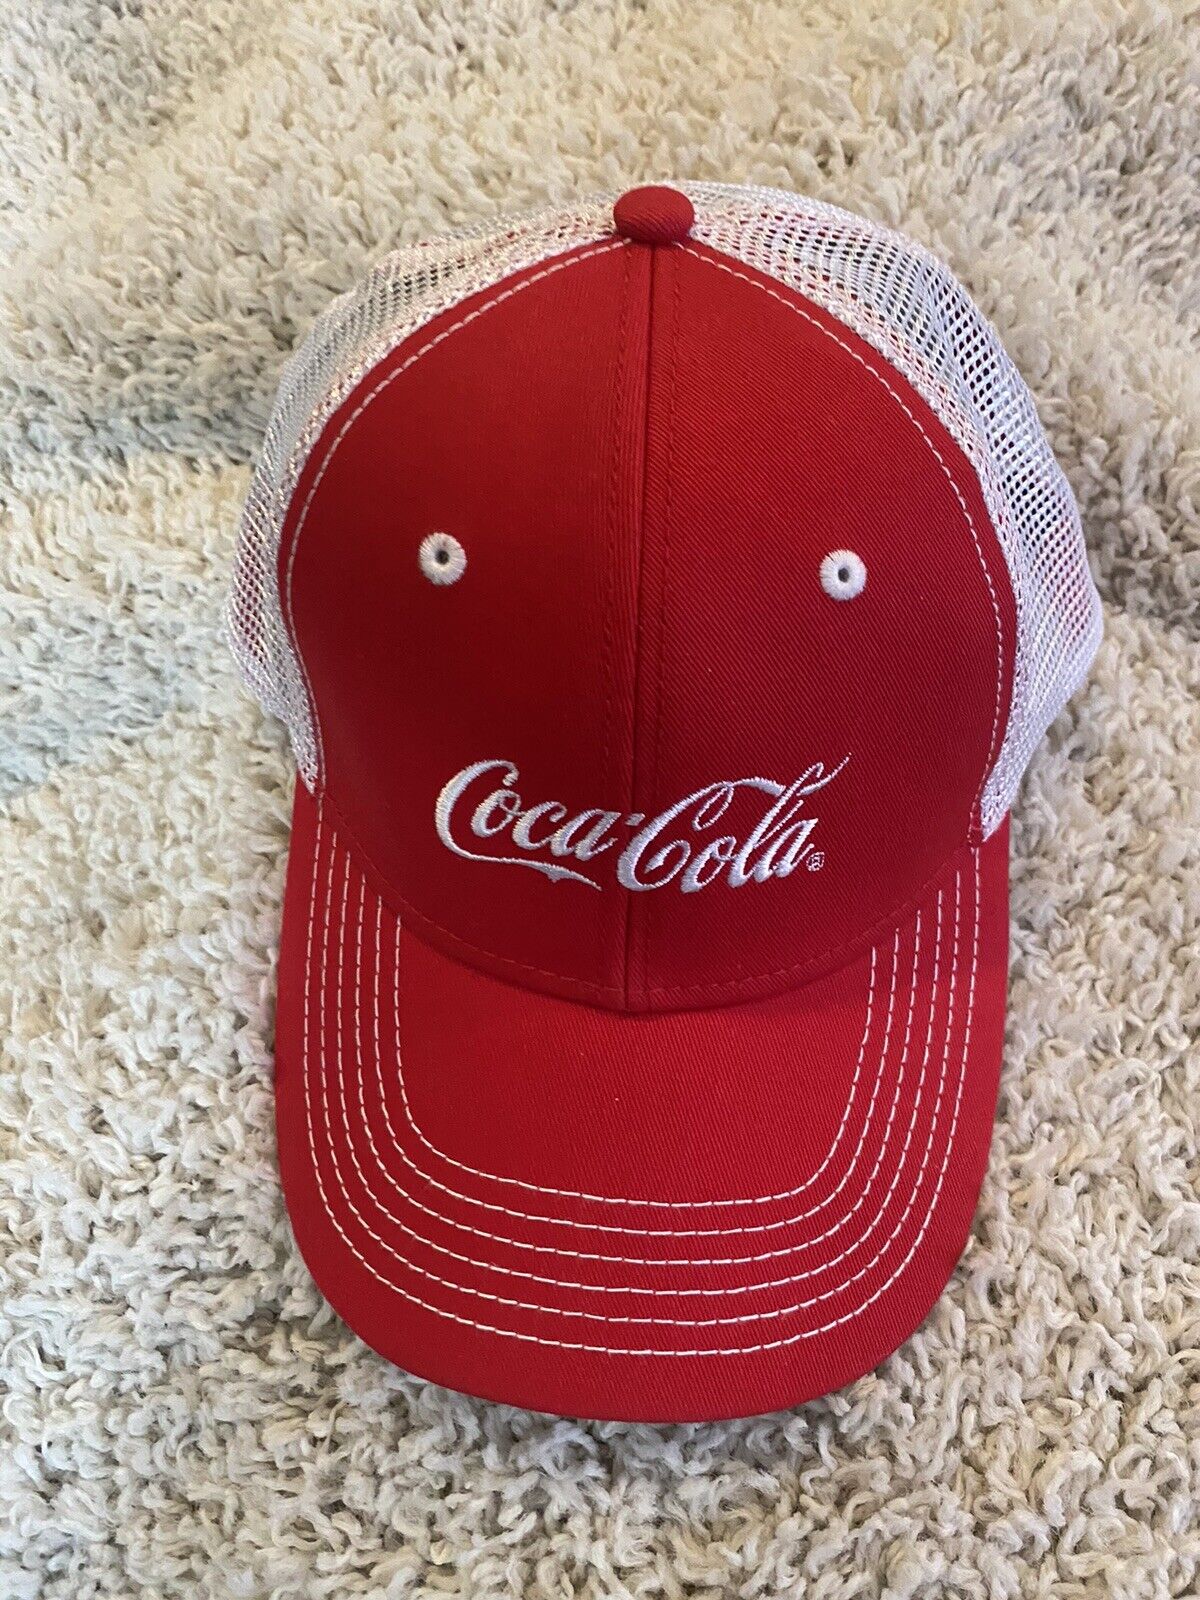 Coca-Cola Red Baseball Cap Hat Adjustable Enjoy Coca-Cola Logo in White